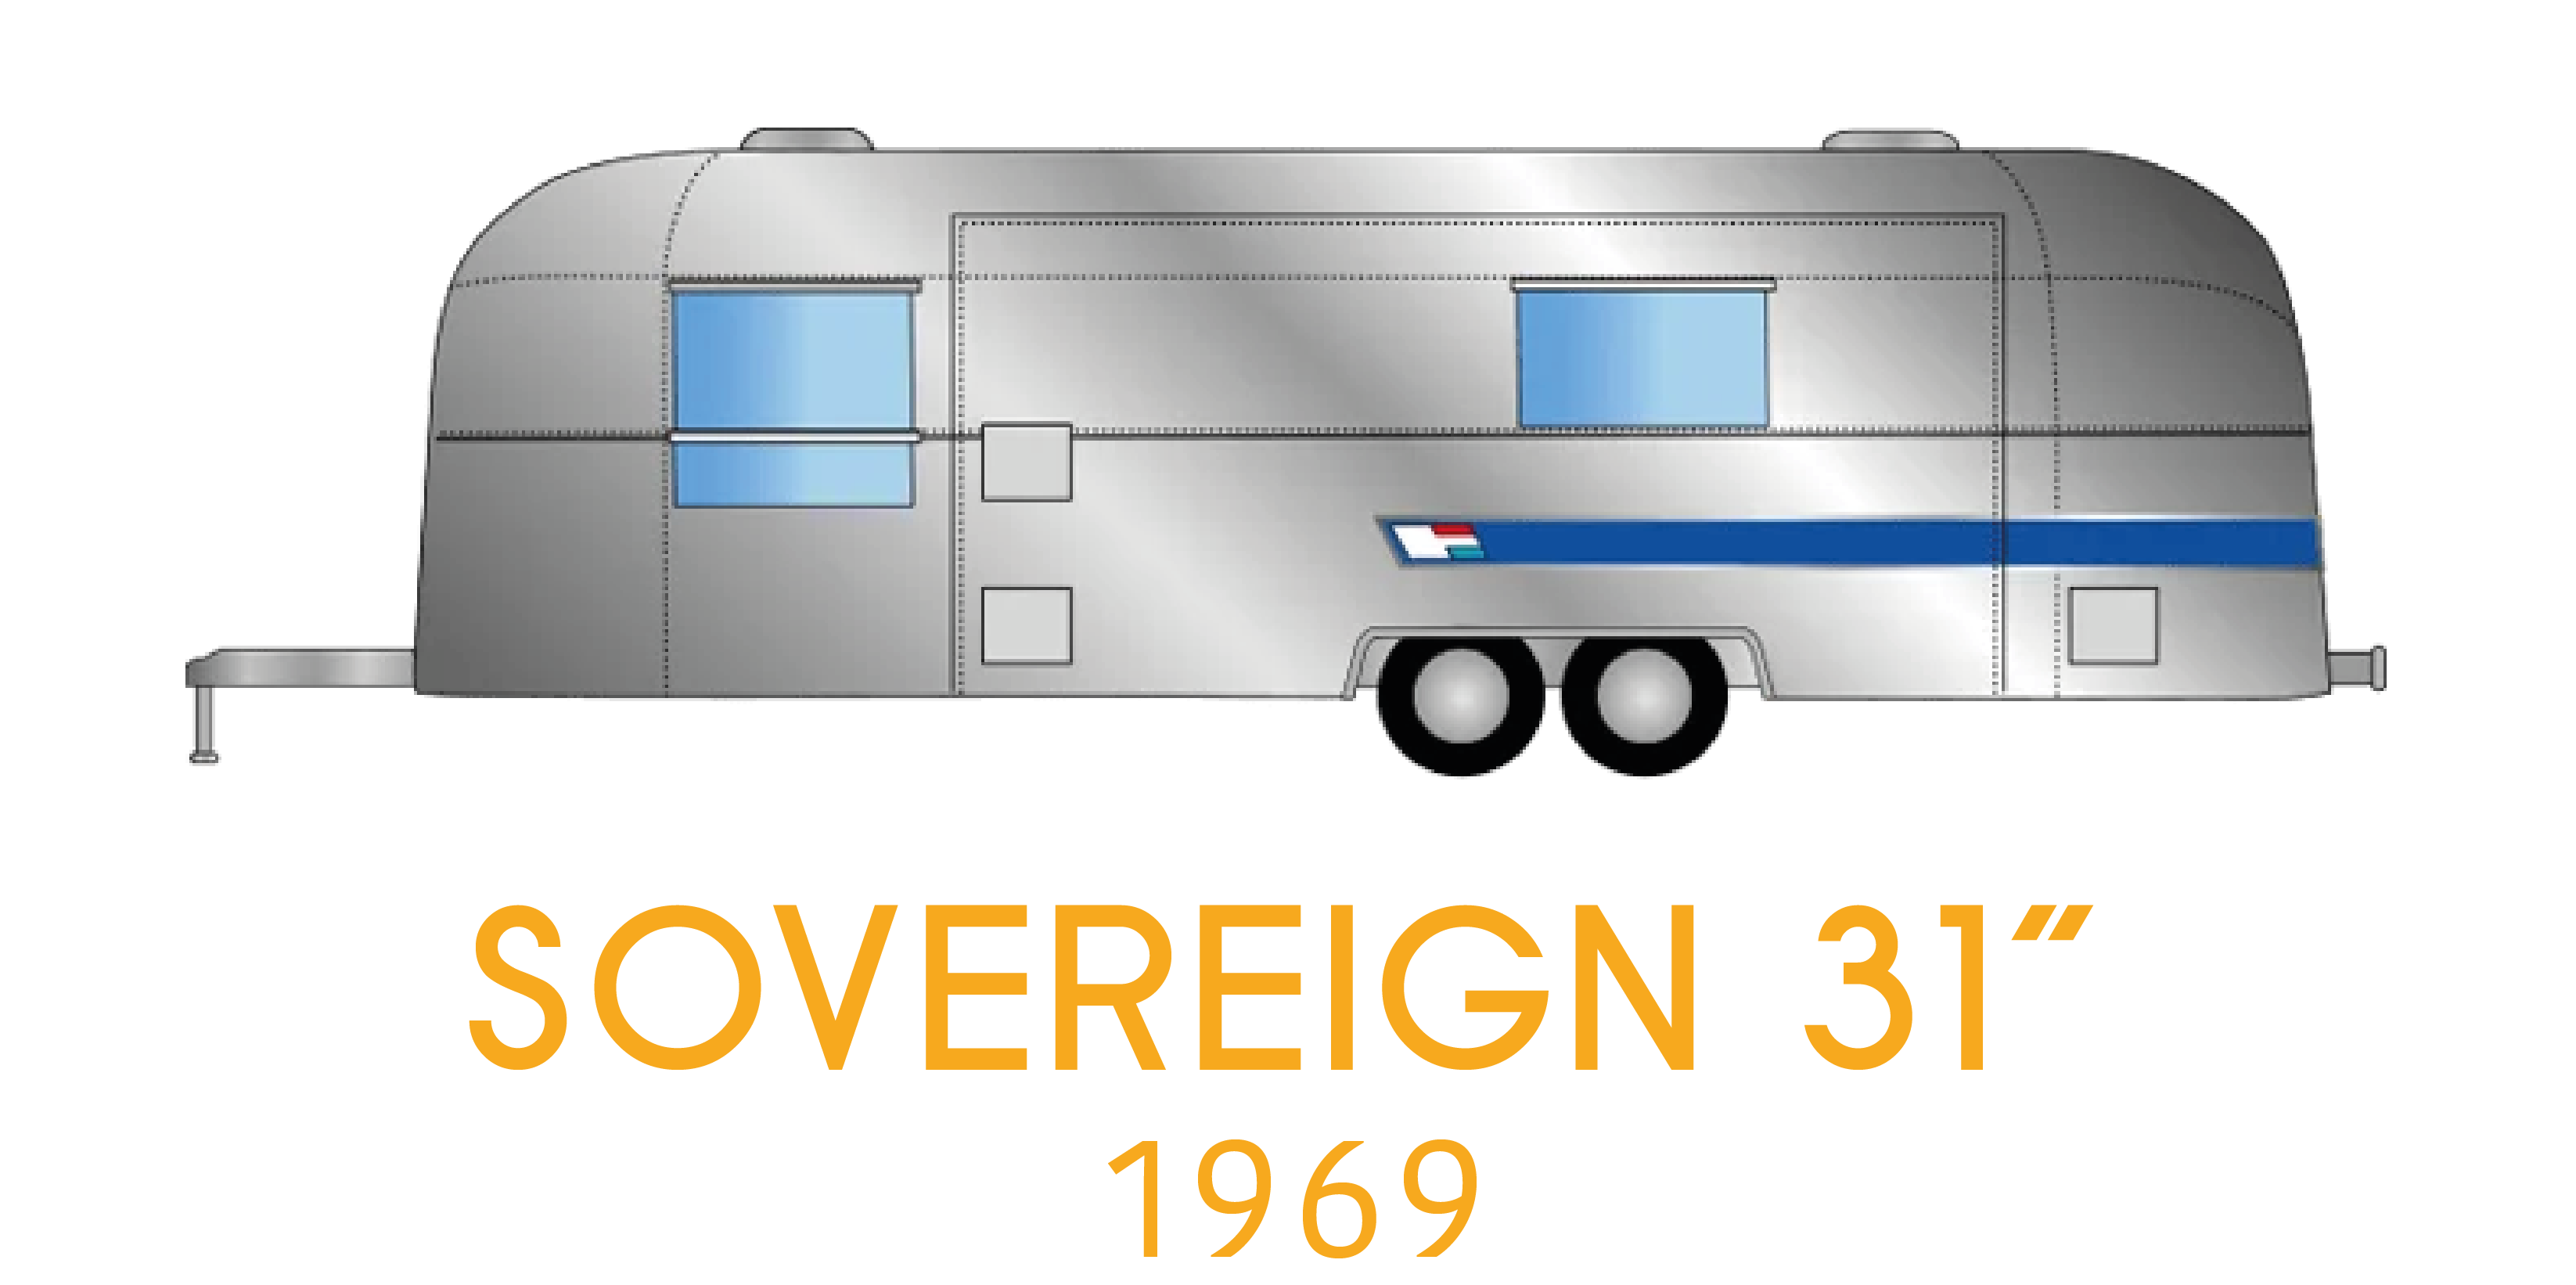 sovereign 31 1969